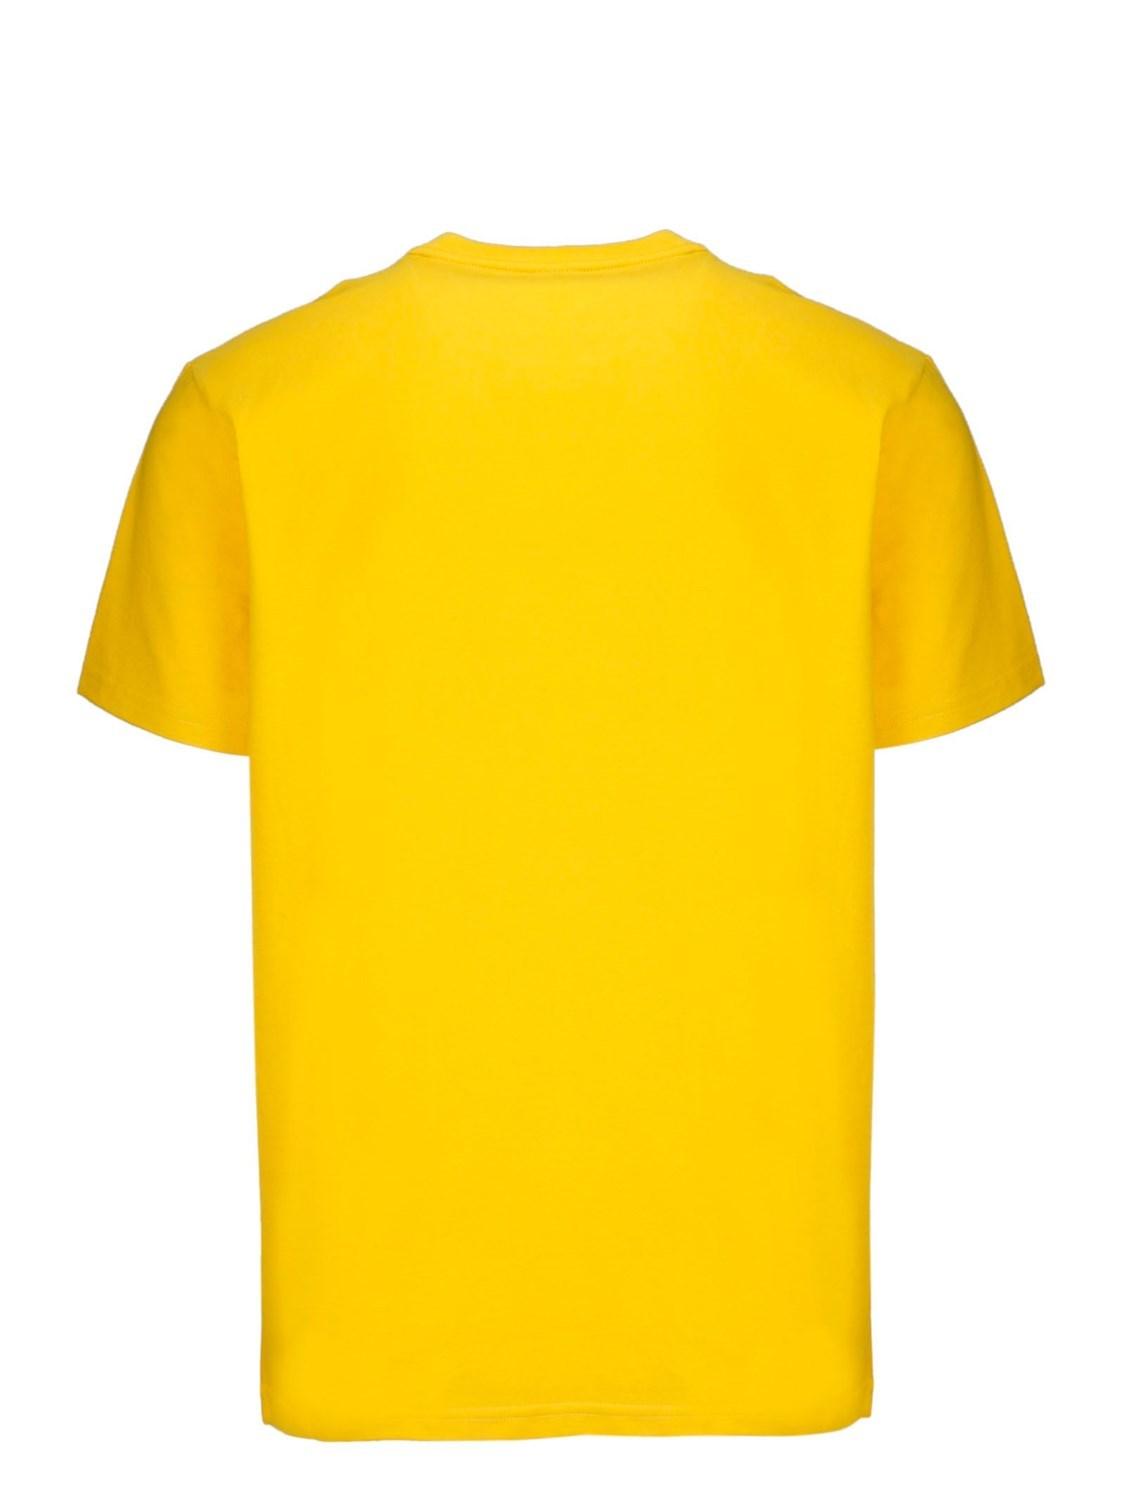 Moncler Men's Logo T-shirt in Yellow for Men - Lyst